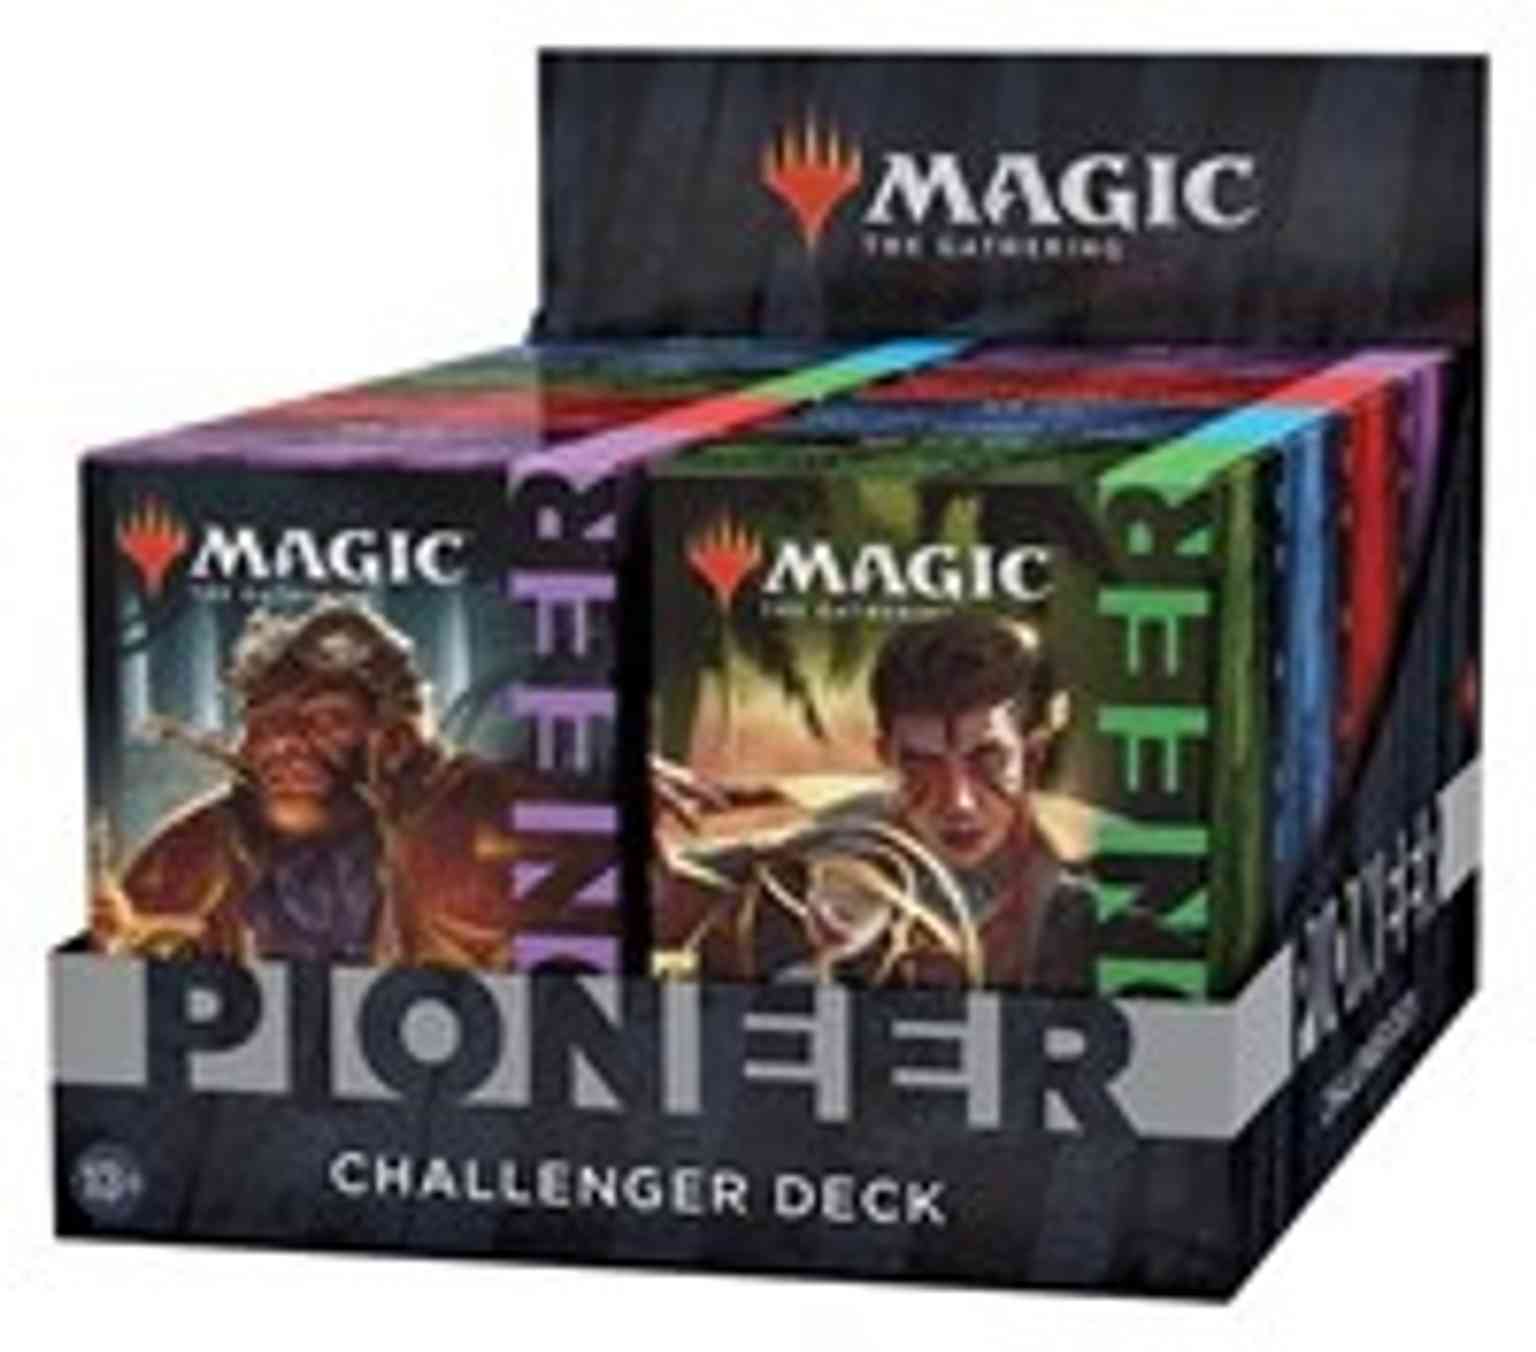 Pioneer Challenger Deck 2021 Display magic card front